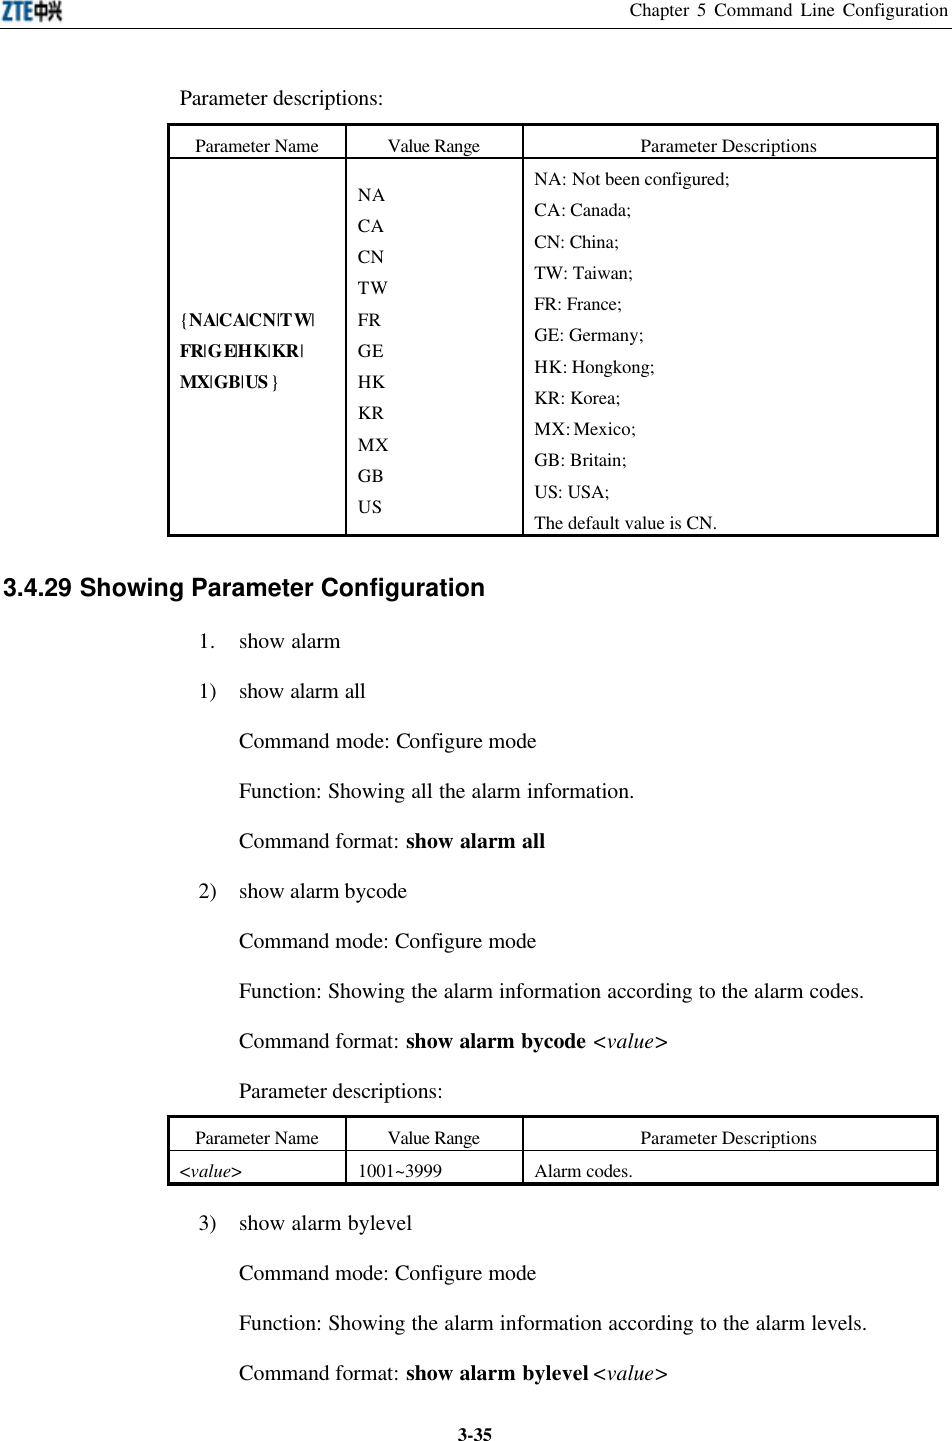 Chapter 5 Command Line Configuration  3-35Parameter descriptions:   Parameter Name Value Range Parameter Descriptions {NA|CA|CN|TW| FR|GE|HK|KR| MX|GB|US } NA CA CN TW FR GE HK KR MX GB US NA: Not been configured;   CA: Canada;  CN: China;   TW: Taiwan;   FR: France;   GE: Germany;   HK: Hongkong;   KR: Korea;   MX: Mexico;   GB: Britain;   US: USA;   The default value is CN.   3.4.29 Showing Parameter Configuration  1. show alarm 1) show alarm all Command mode: Configure mode   Function: Showing all the alarm information.   Command format: show alarm all 2) show alarm bycode   Command mode: Configure mode   Function: Showing the alarm information according to the alarm codes.   Command format: show alarm bycode &lt;value&gt; Parameter descriptions:   Parameter Name Value Range Parameter Descriptions &lt;value&gt; 1001~3999 Alarm codes. 3) show alarm bylevel Command mode: Configure mode   Function: Showing the alarm information according to the alarm levels.   Command format: show alarm bylevel &lt;value&gt; 